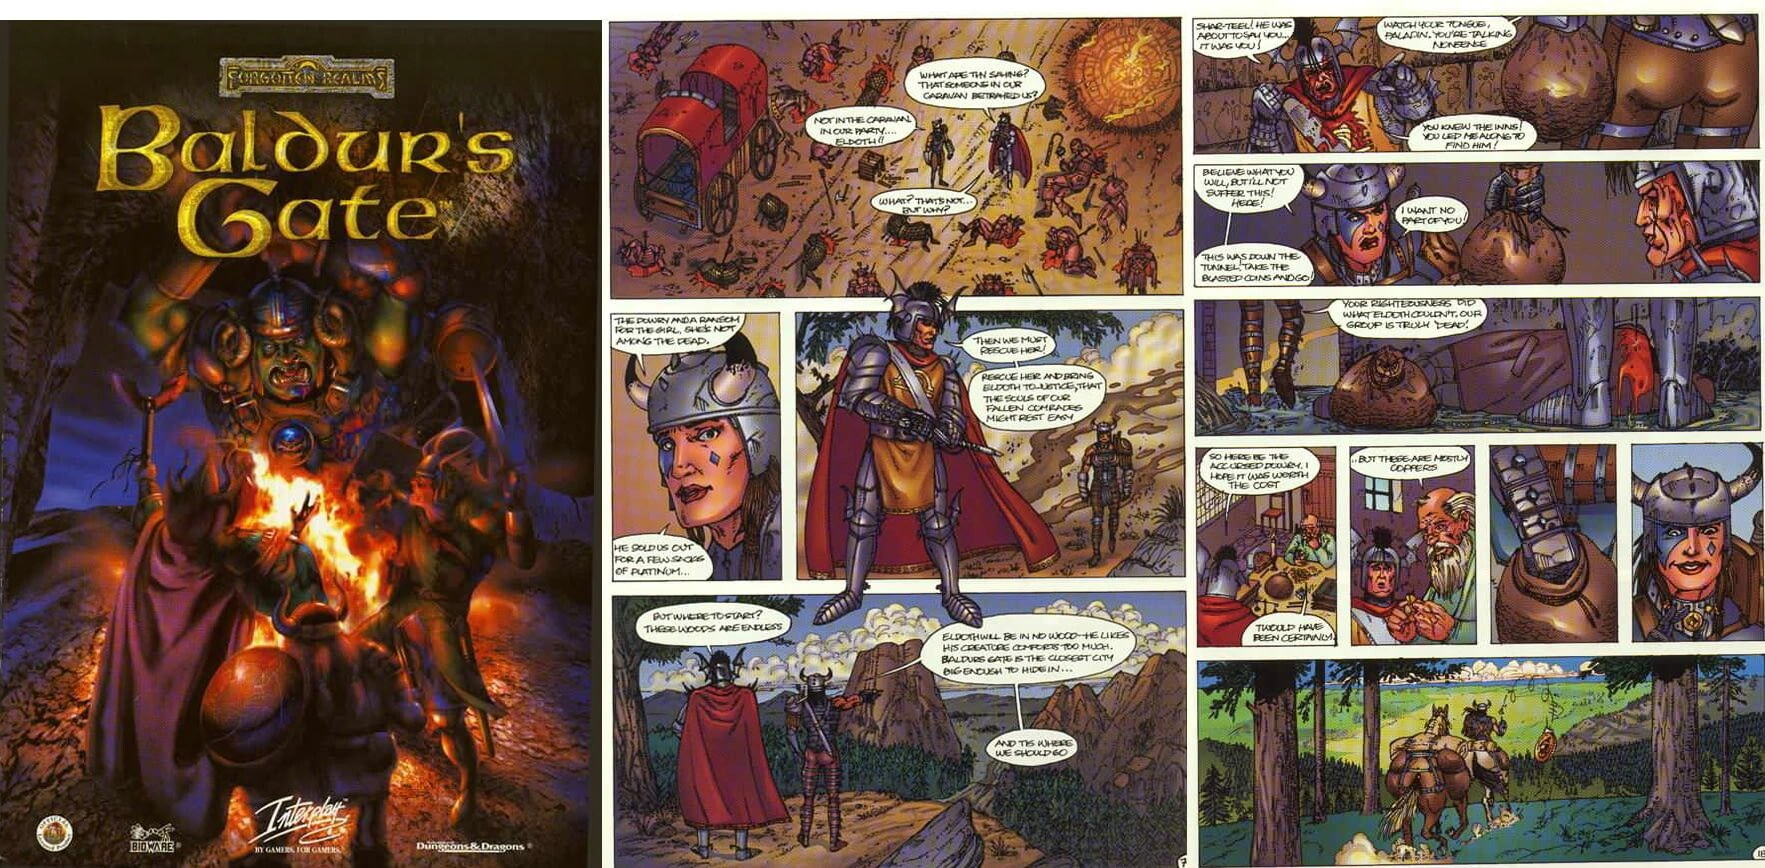 [Baldur’s Gate] Комикс за авторством Джеймса Олена и Люка Кристьянсона.